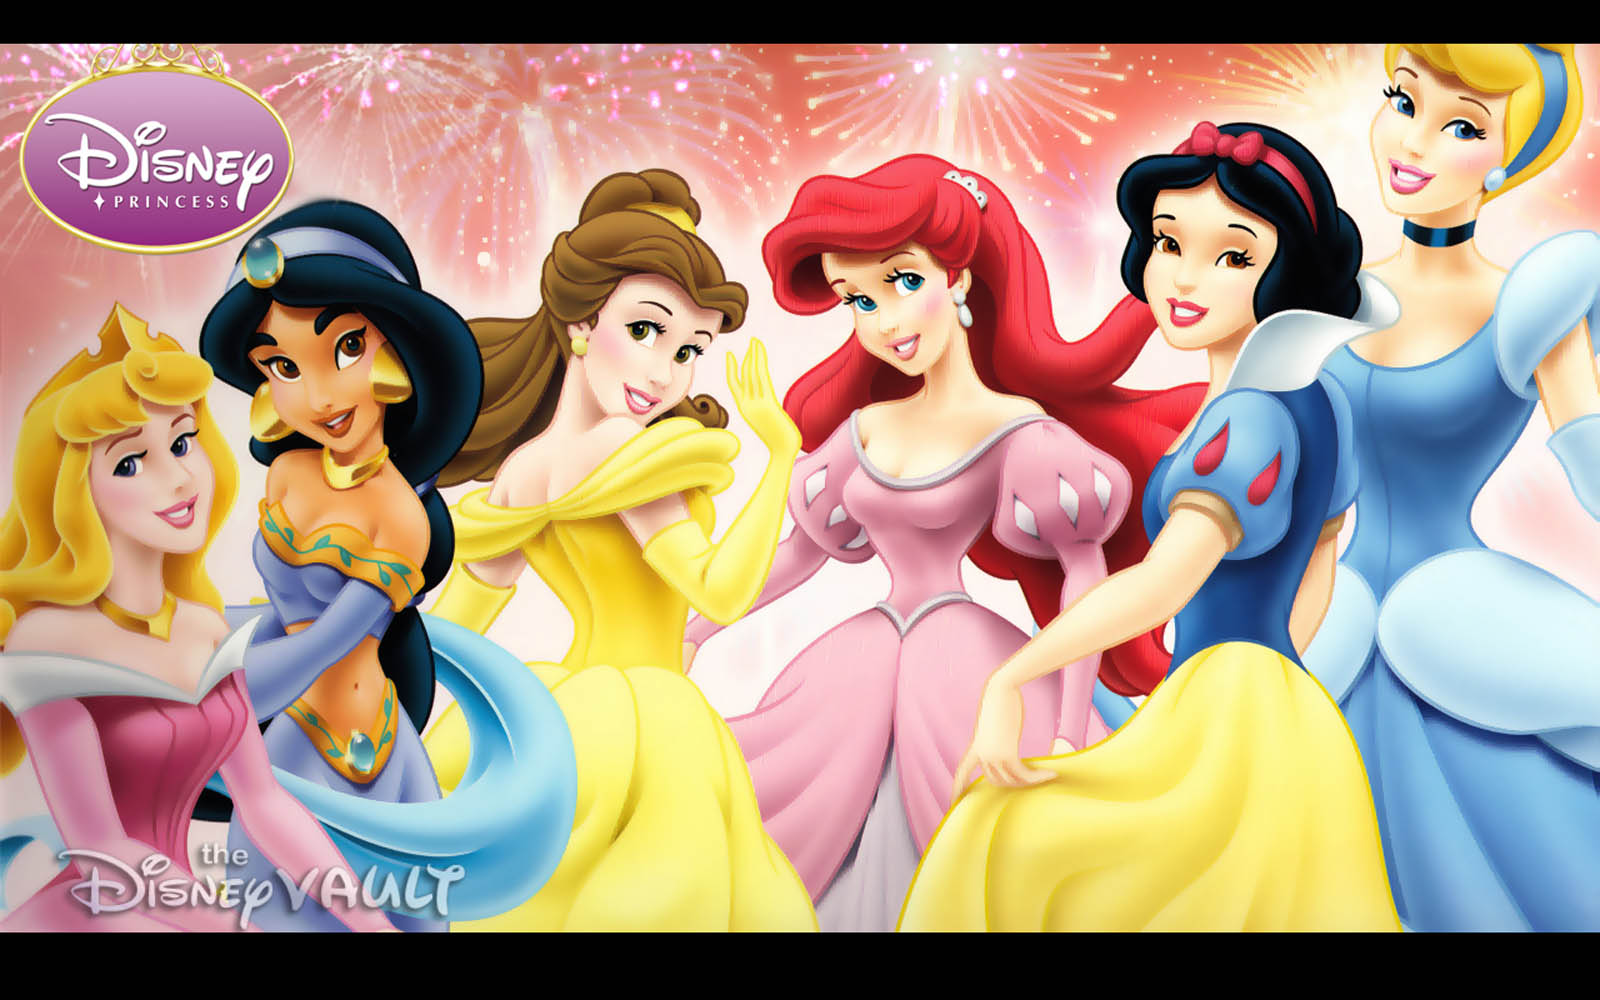  Disney  Princess  Wallpapers wallpapers screensavers